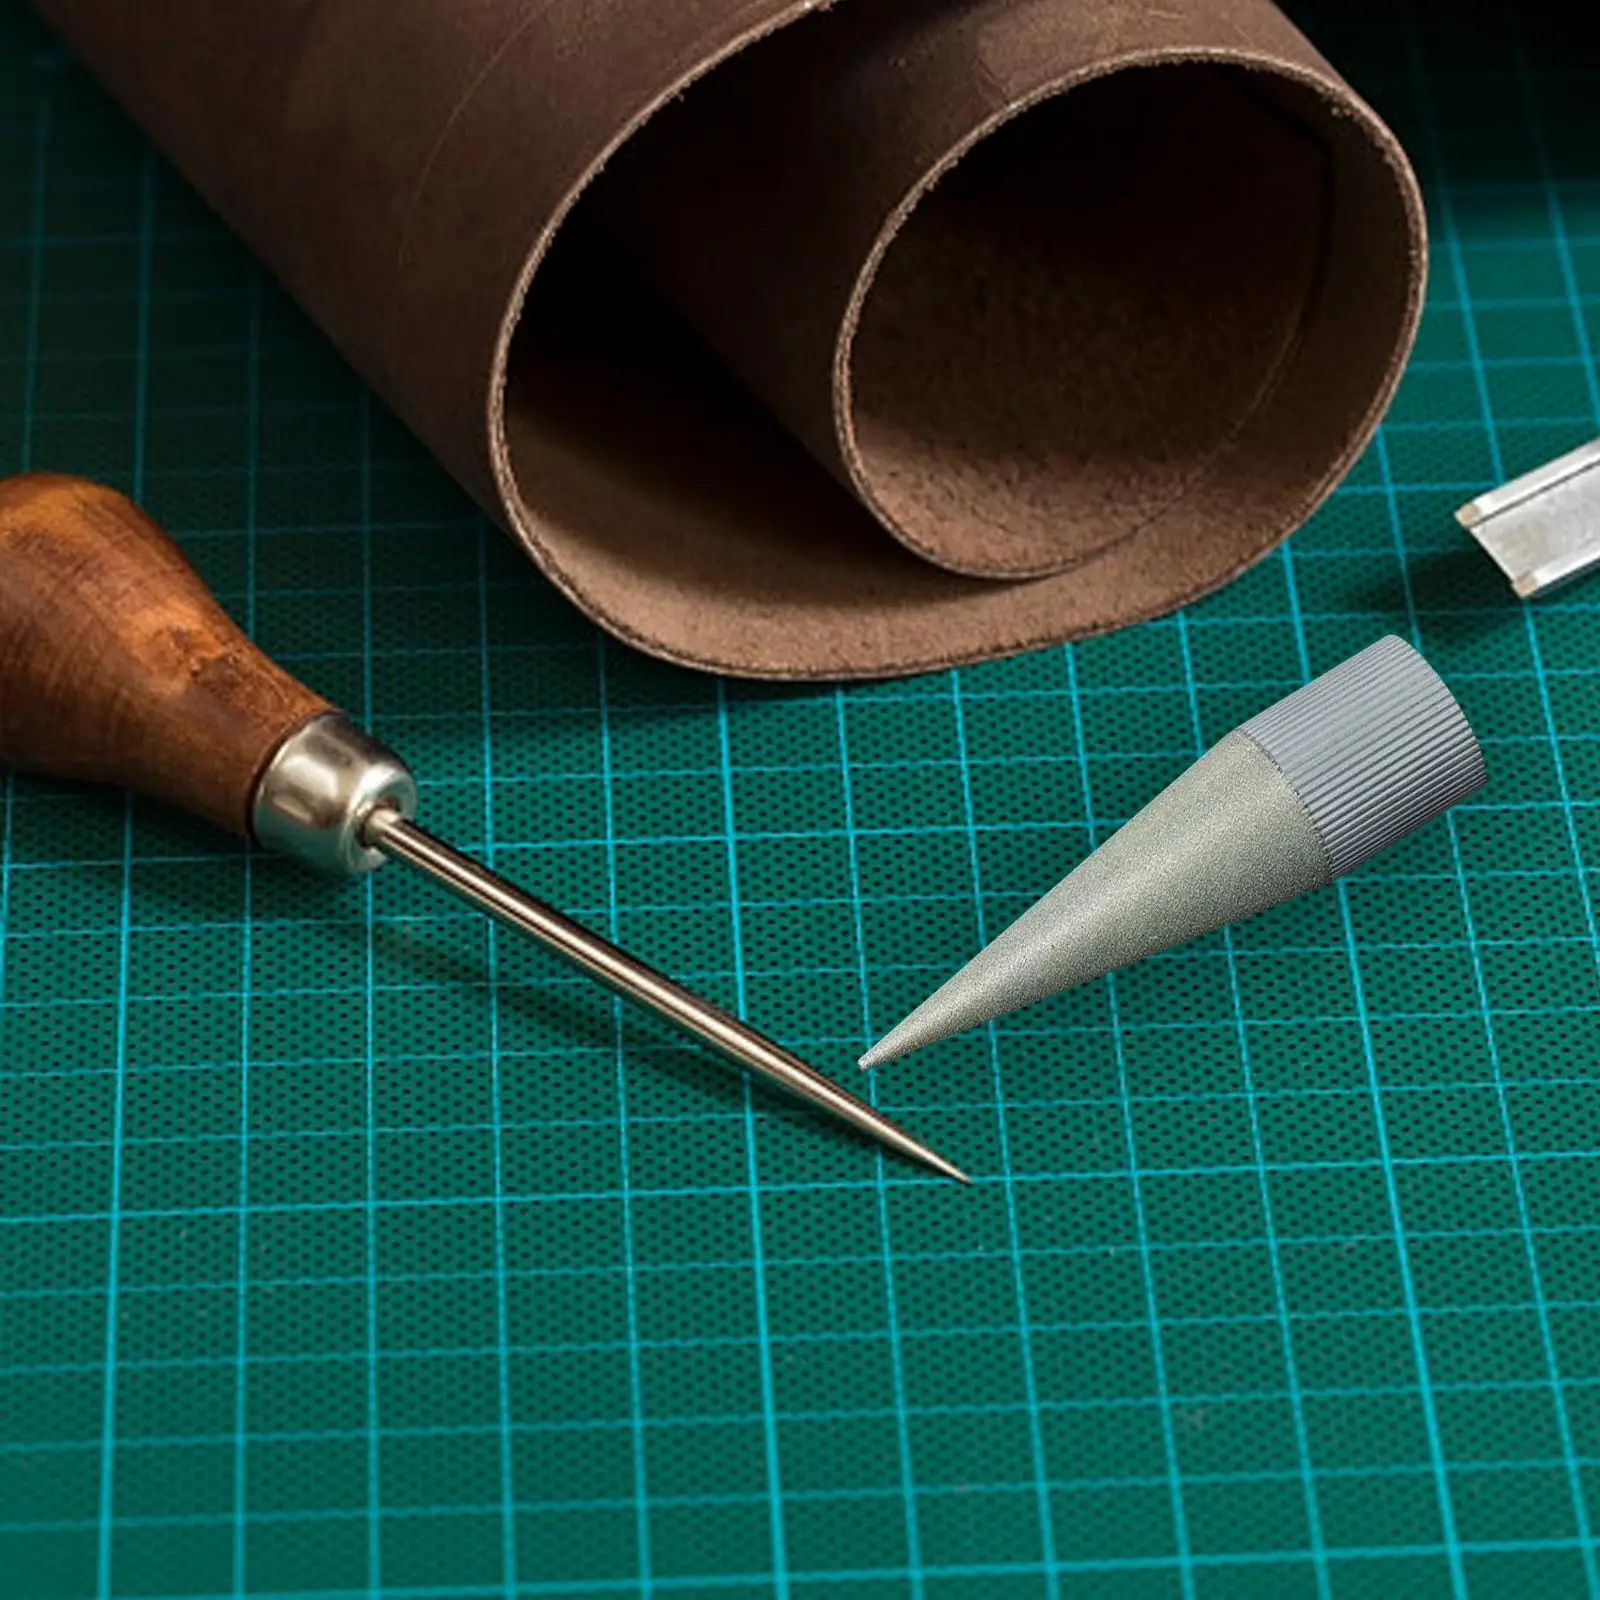 Emery Round Hole Punch Craft Manual Punch Polishing Heavy Duty Grinder Tool Handmade DIY PU Leather Edge Sharpener Sander